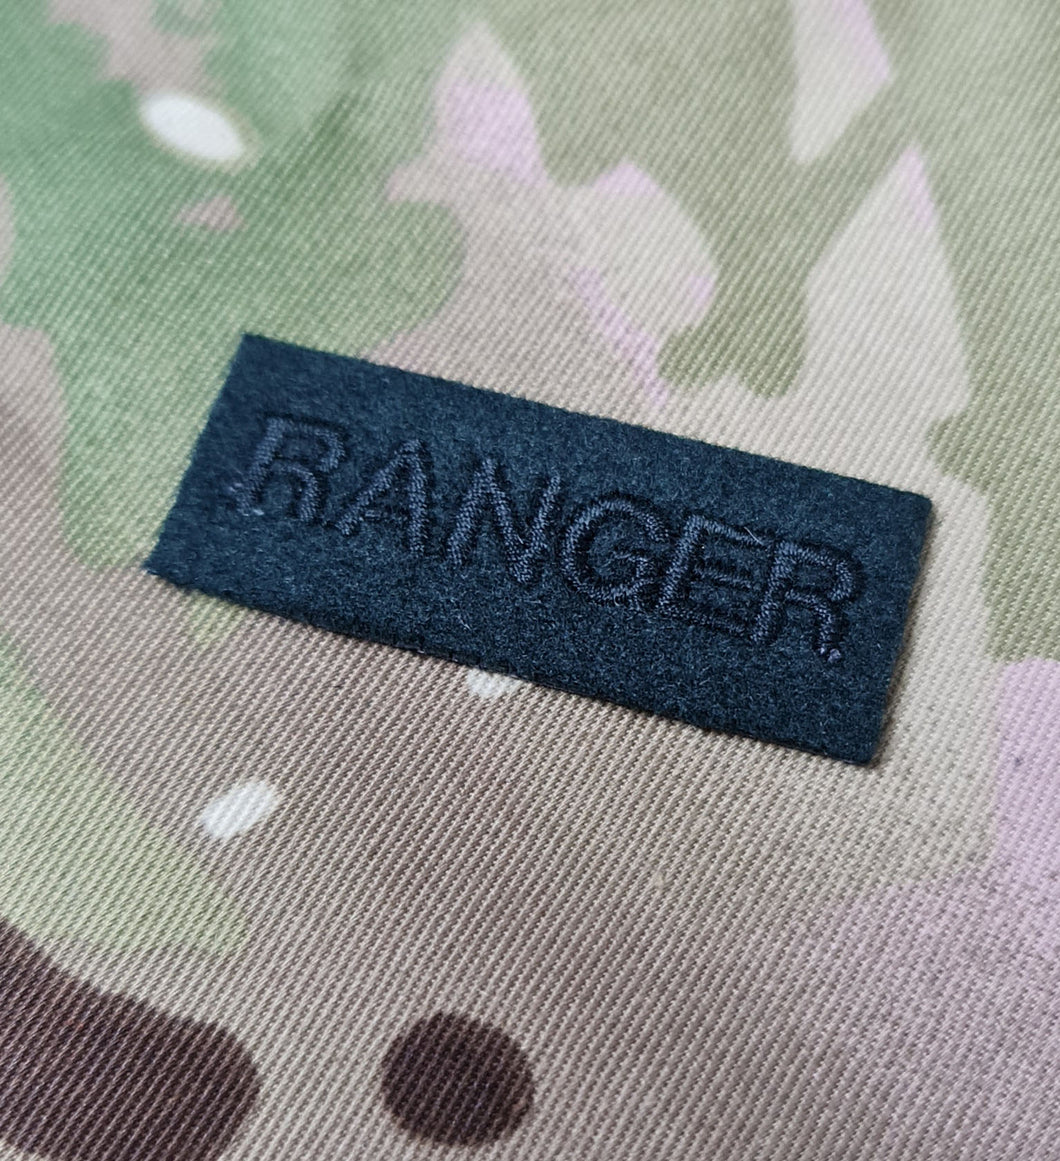 British Army Ranger Qualification No2 Dress Badge (Rifle Green / Black)